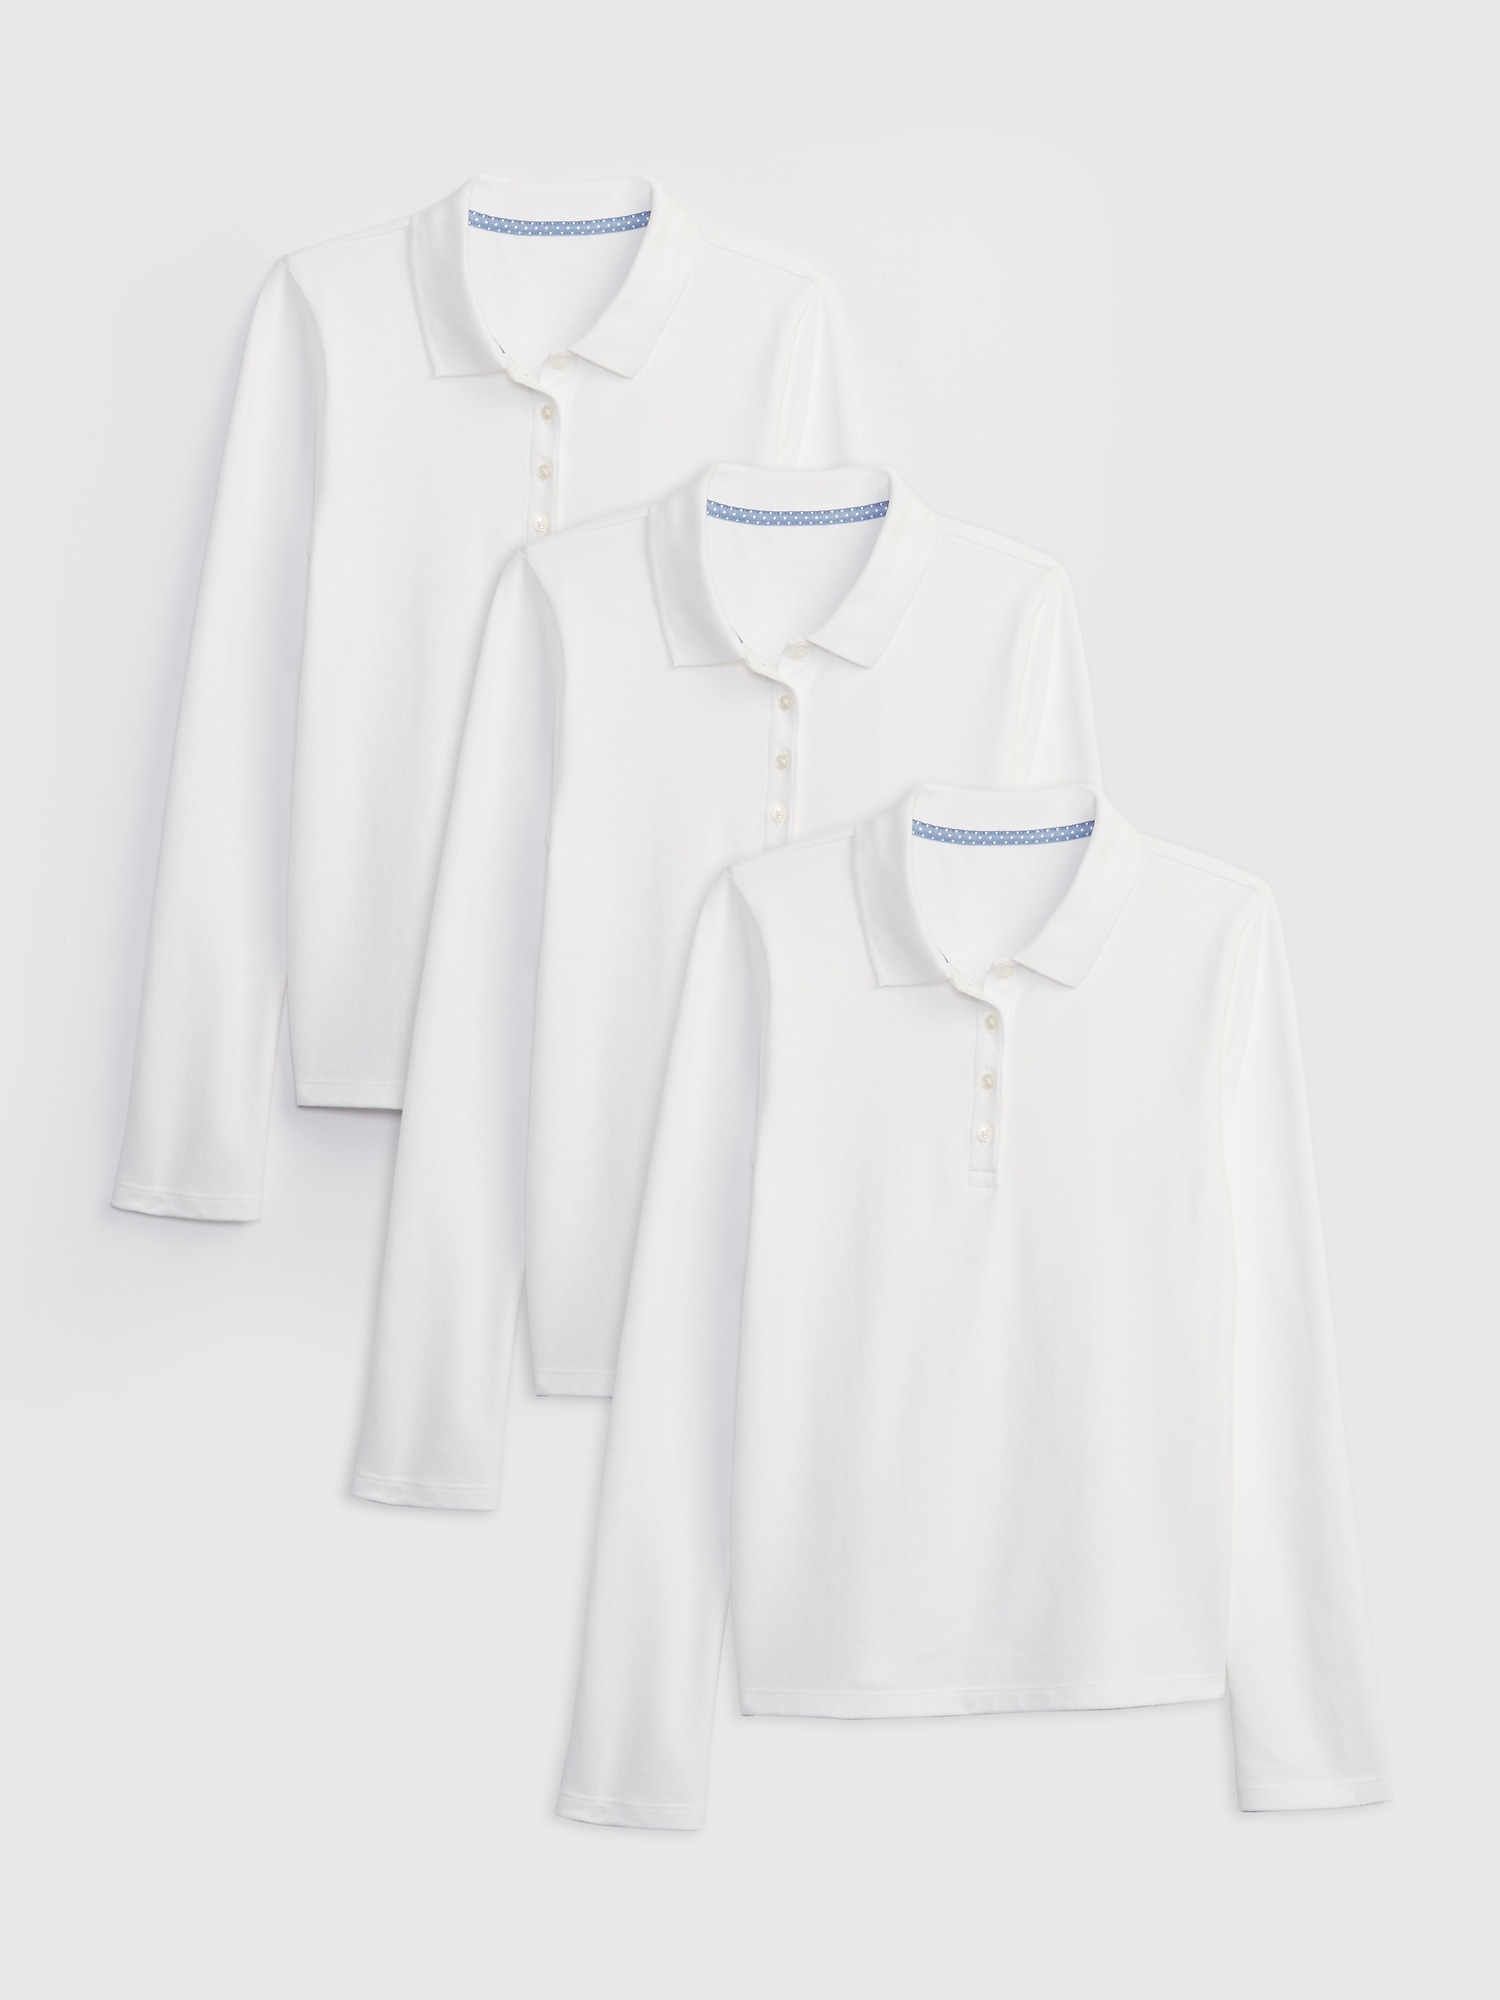 Gap Kids Cotton Polo Shirt (3-Pack)